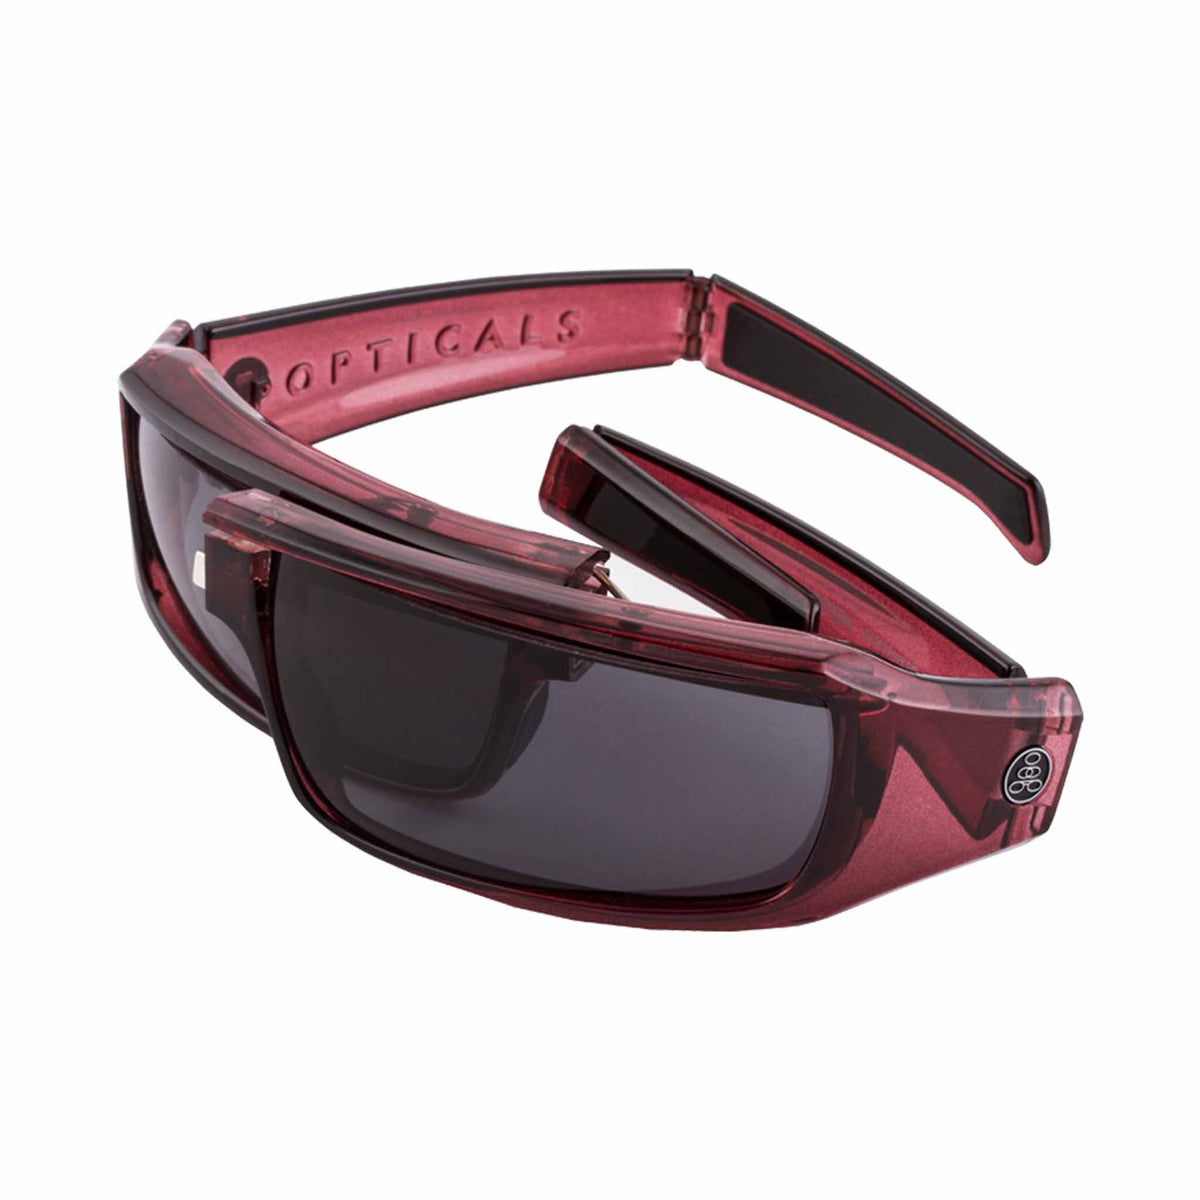 Popticals, Premium Compact Sunglasses, PopSign, 020020-WXGP, Polarized Sunglasses, Gloss Wine Crystal Frame, Gray Lenses, Spider View